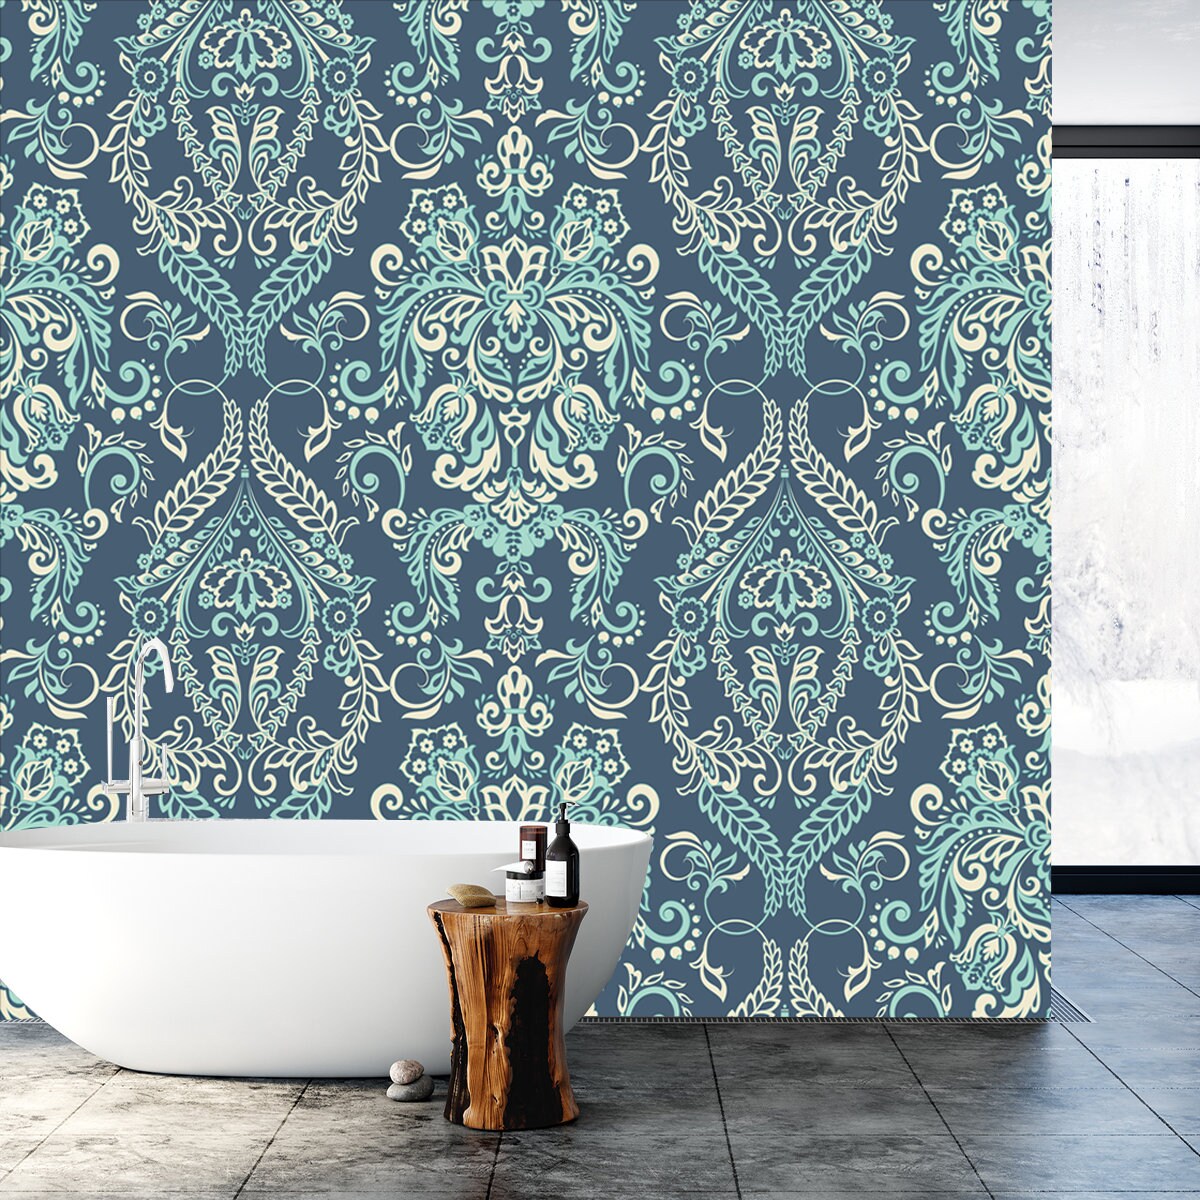 Floral Textured Print. Damask Seamless Vintage Pattern Wallpaper Bathroom Mural